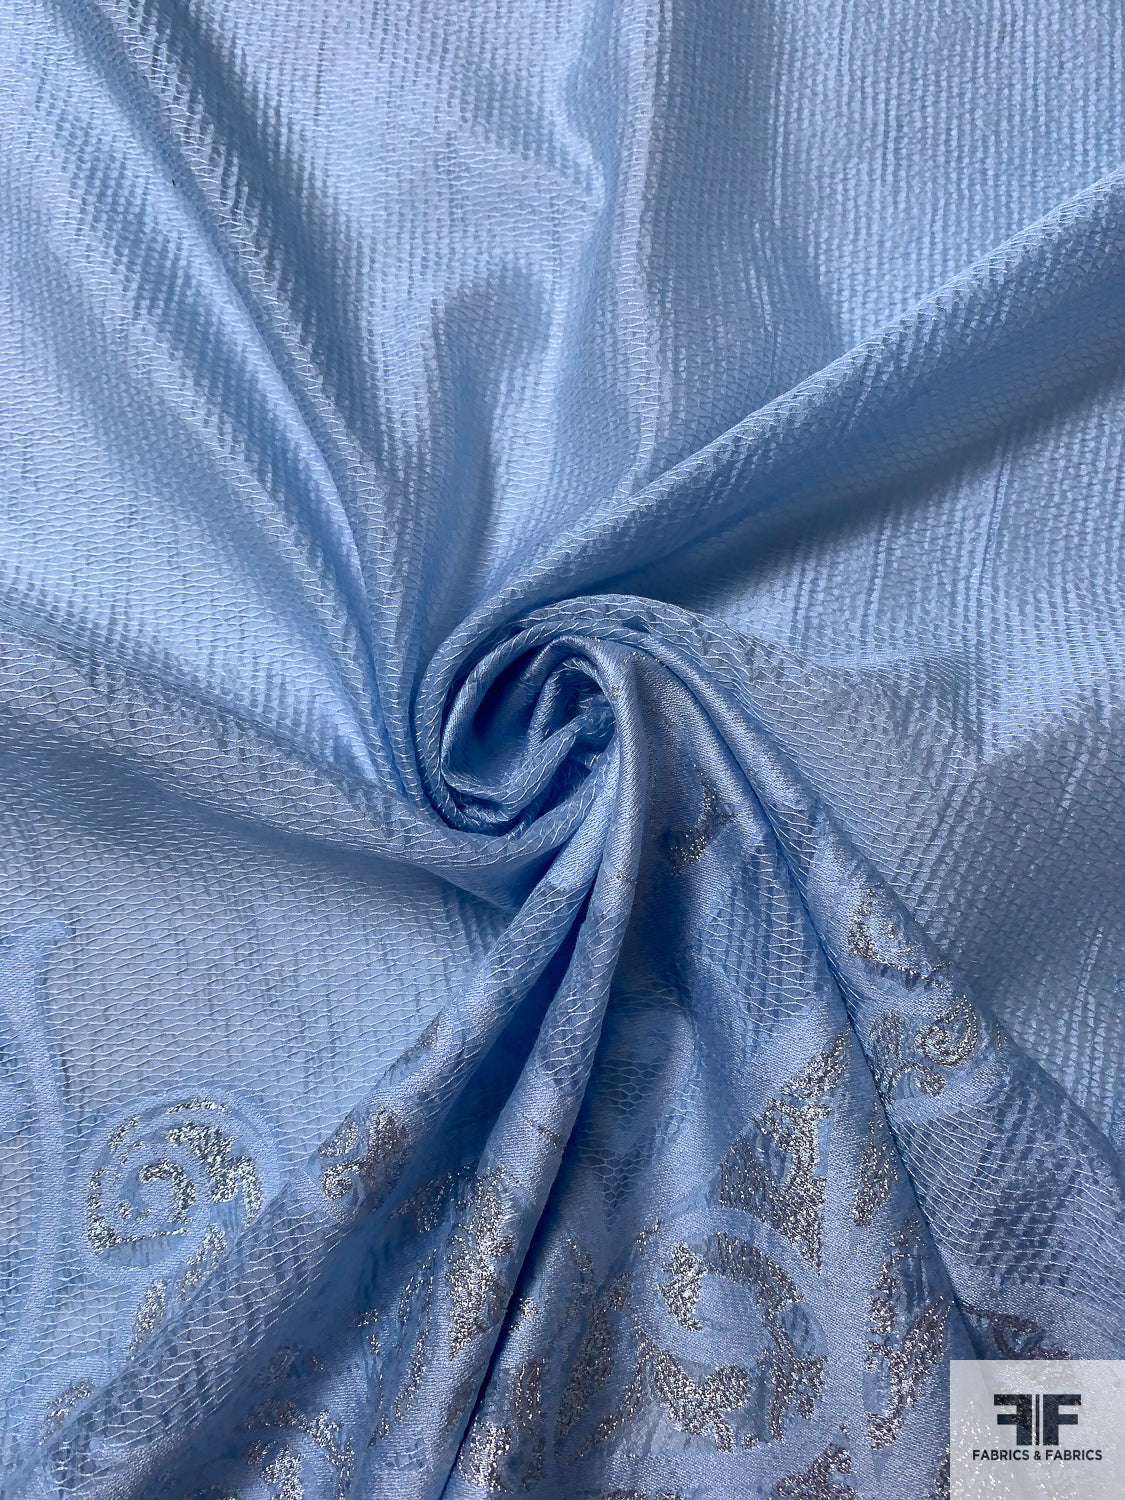 Italian Pique-Weave Novelty Organza Panel - Soft Blue / Silver